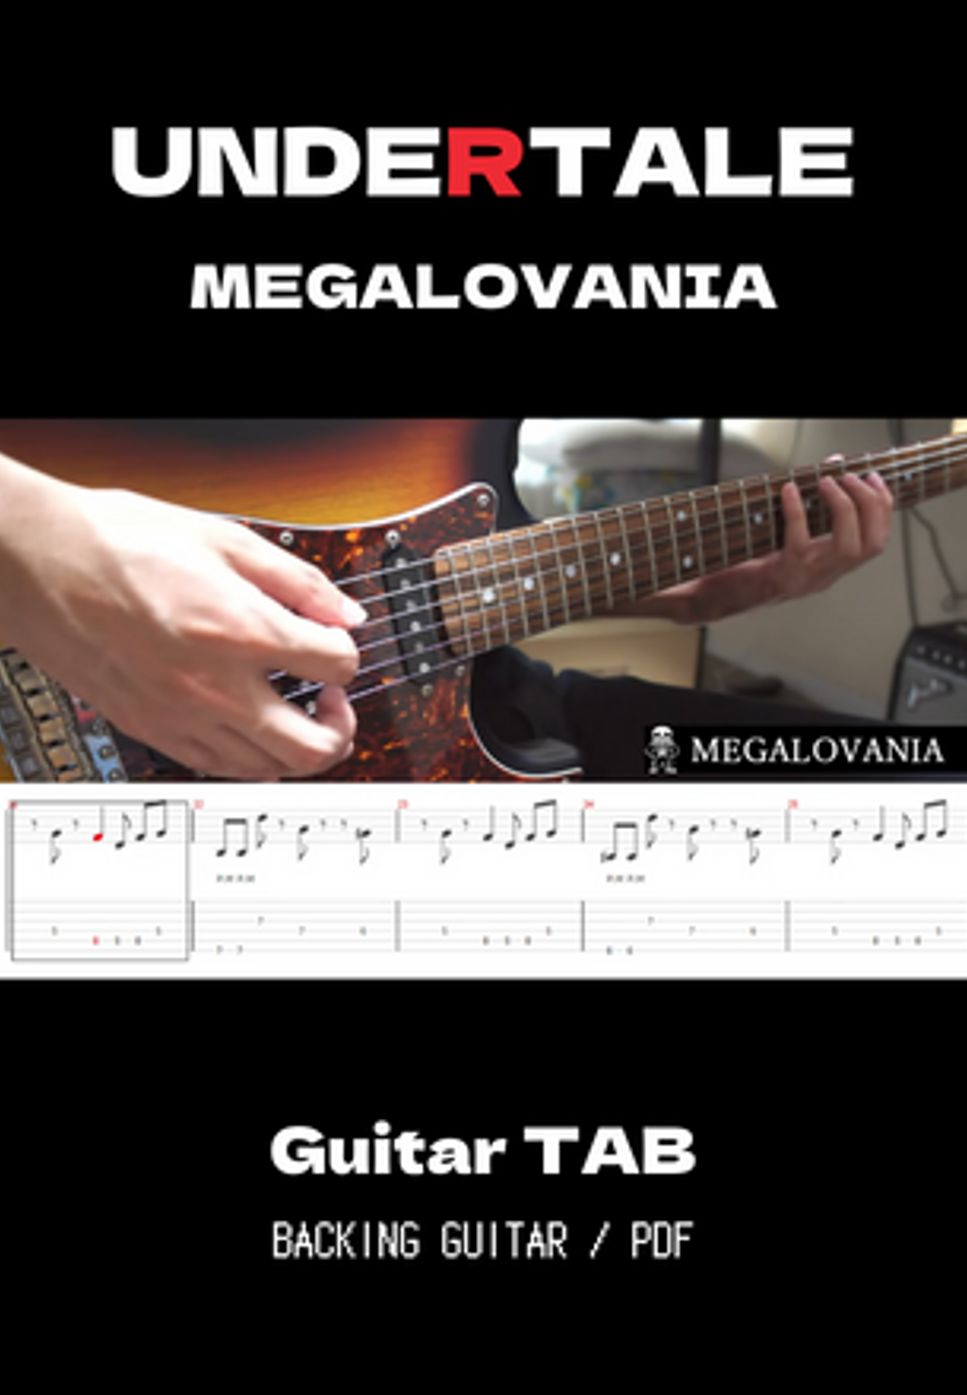 UNDERTALE - MEGALOVANIA (ギターインストVer / バッキングパートのみ) by トビー・フォックス